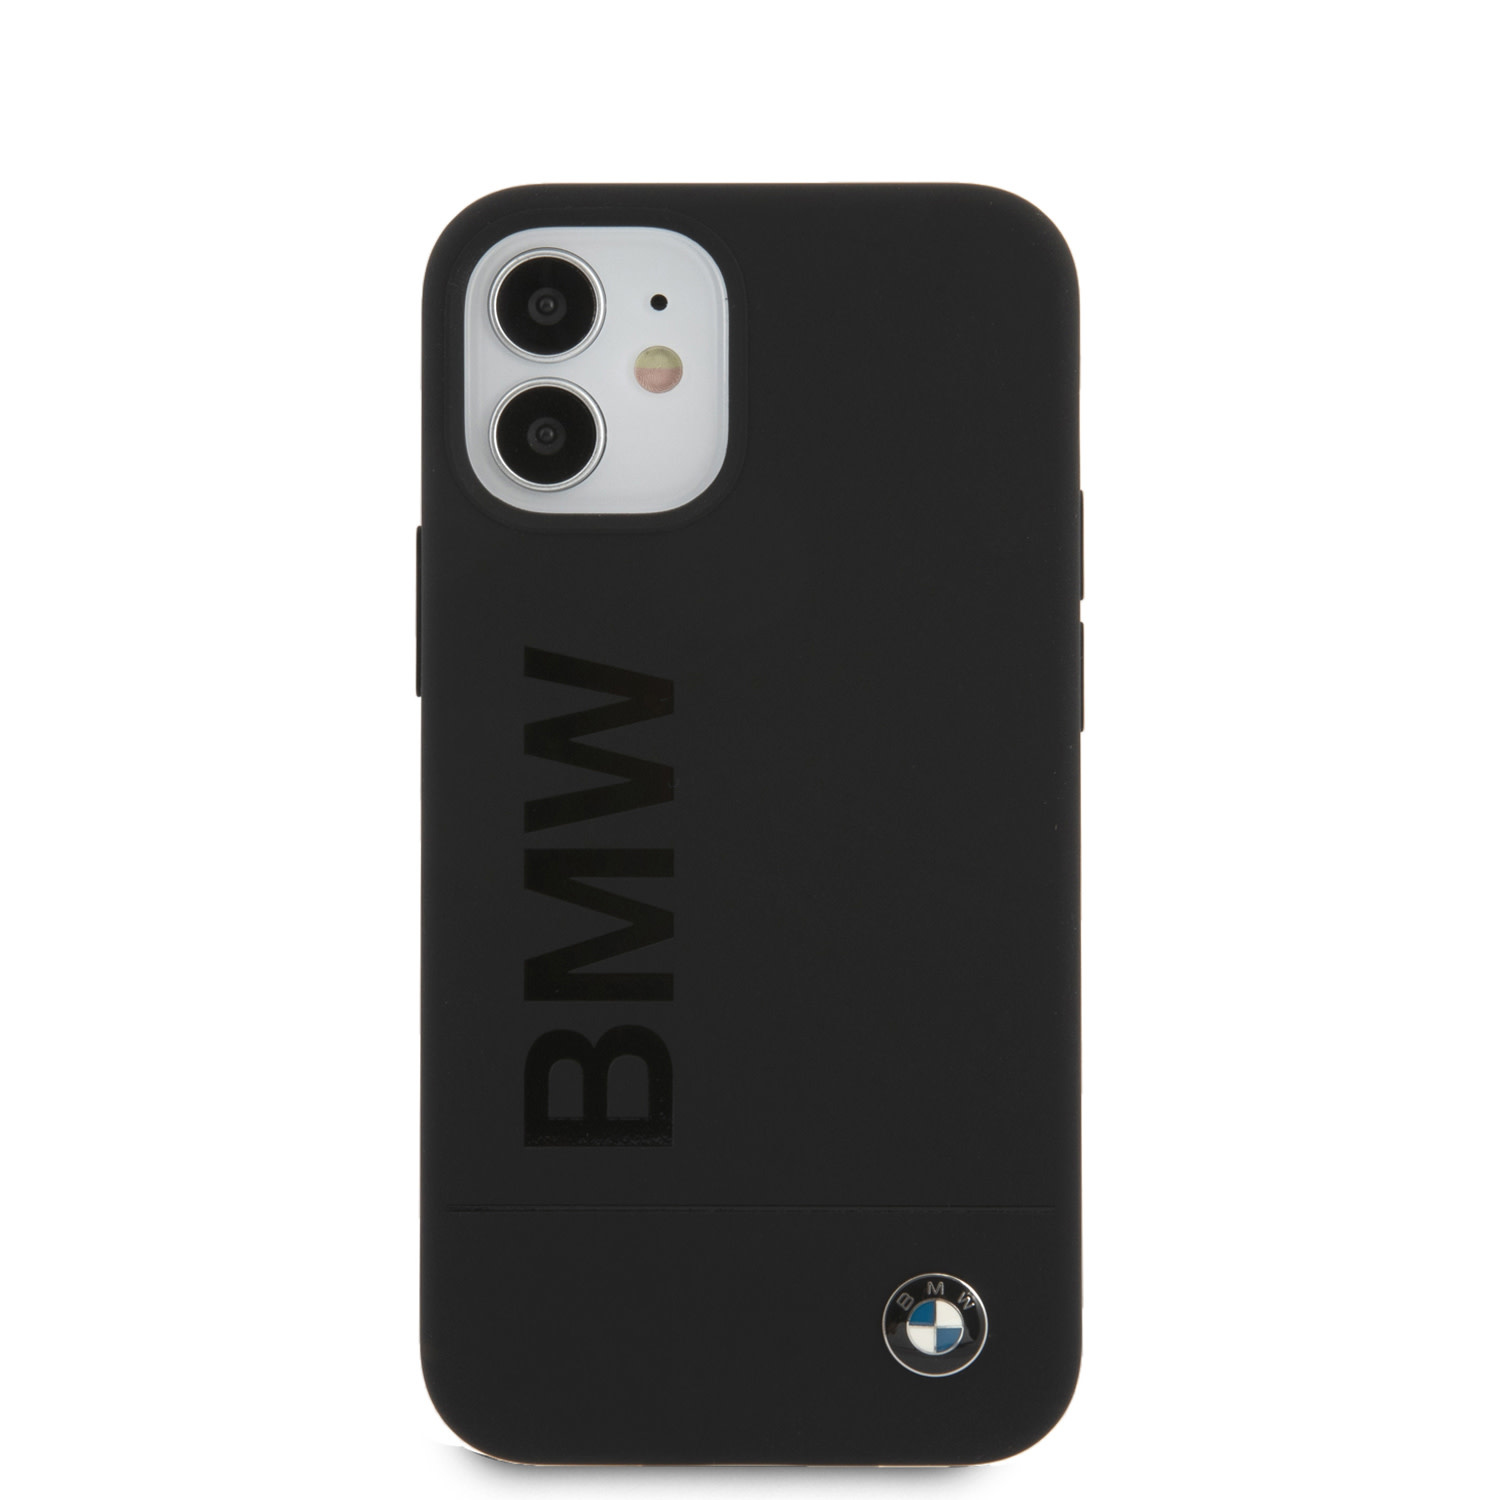 Diversen elkaar hemel BMW Apple iPhone 12 Mini zwart Backcover hoesje - Big Logo - NT Mobiel  Accessoires - Nederland